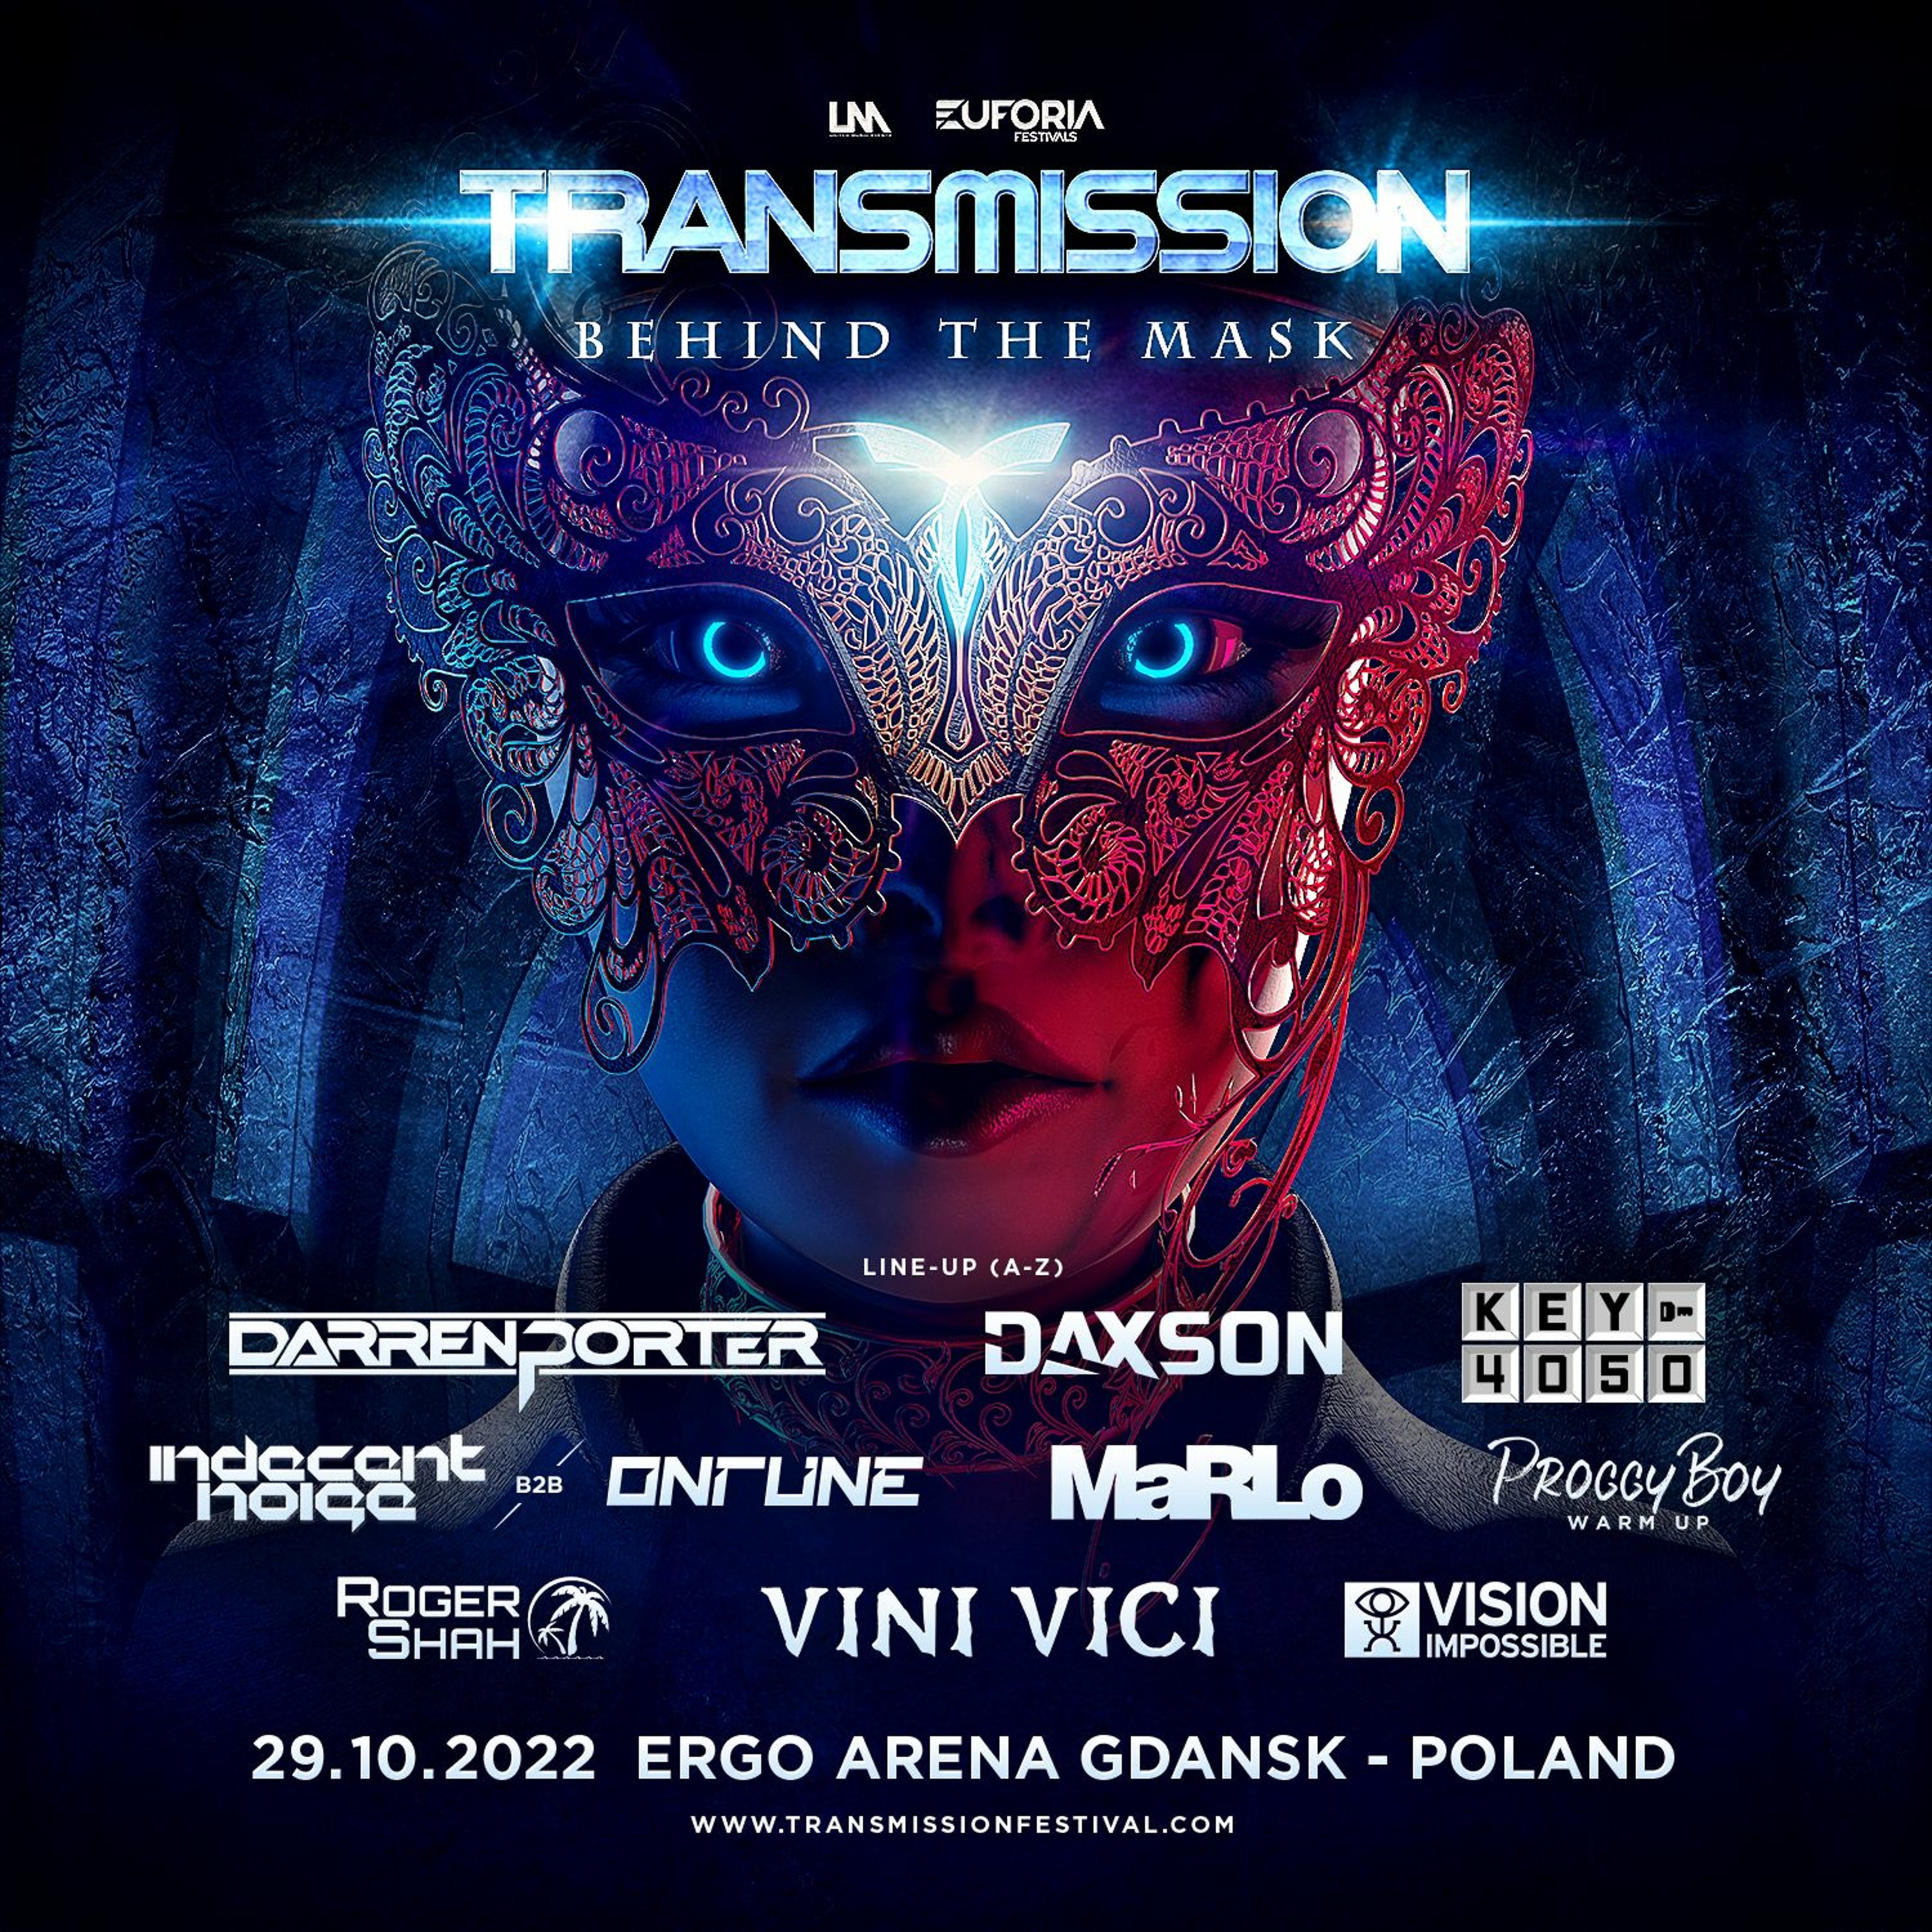 Key4050 LIVE @ Transmission Poland 2022